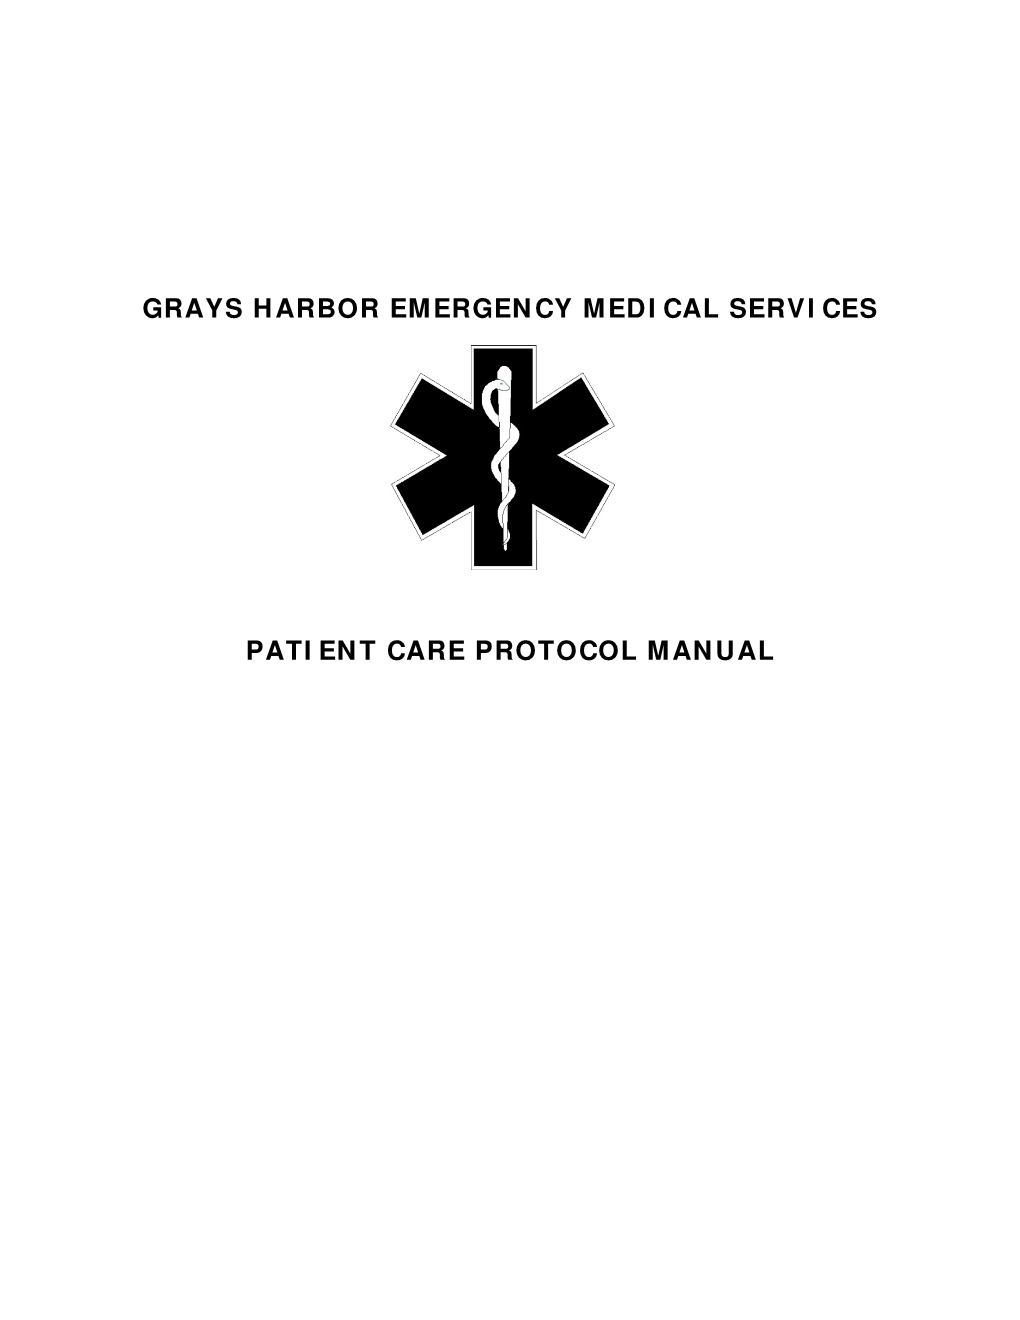 Patient Care Protocol Manual